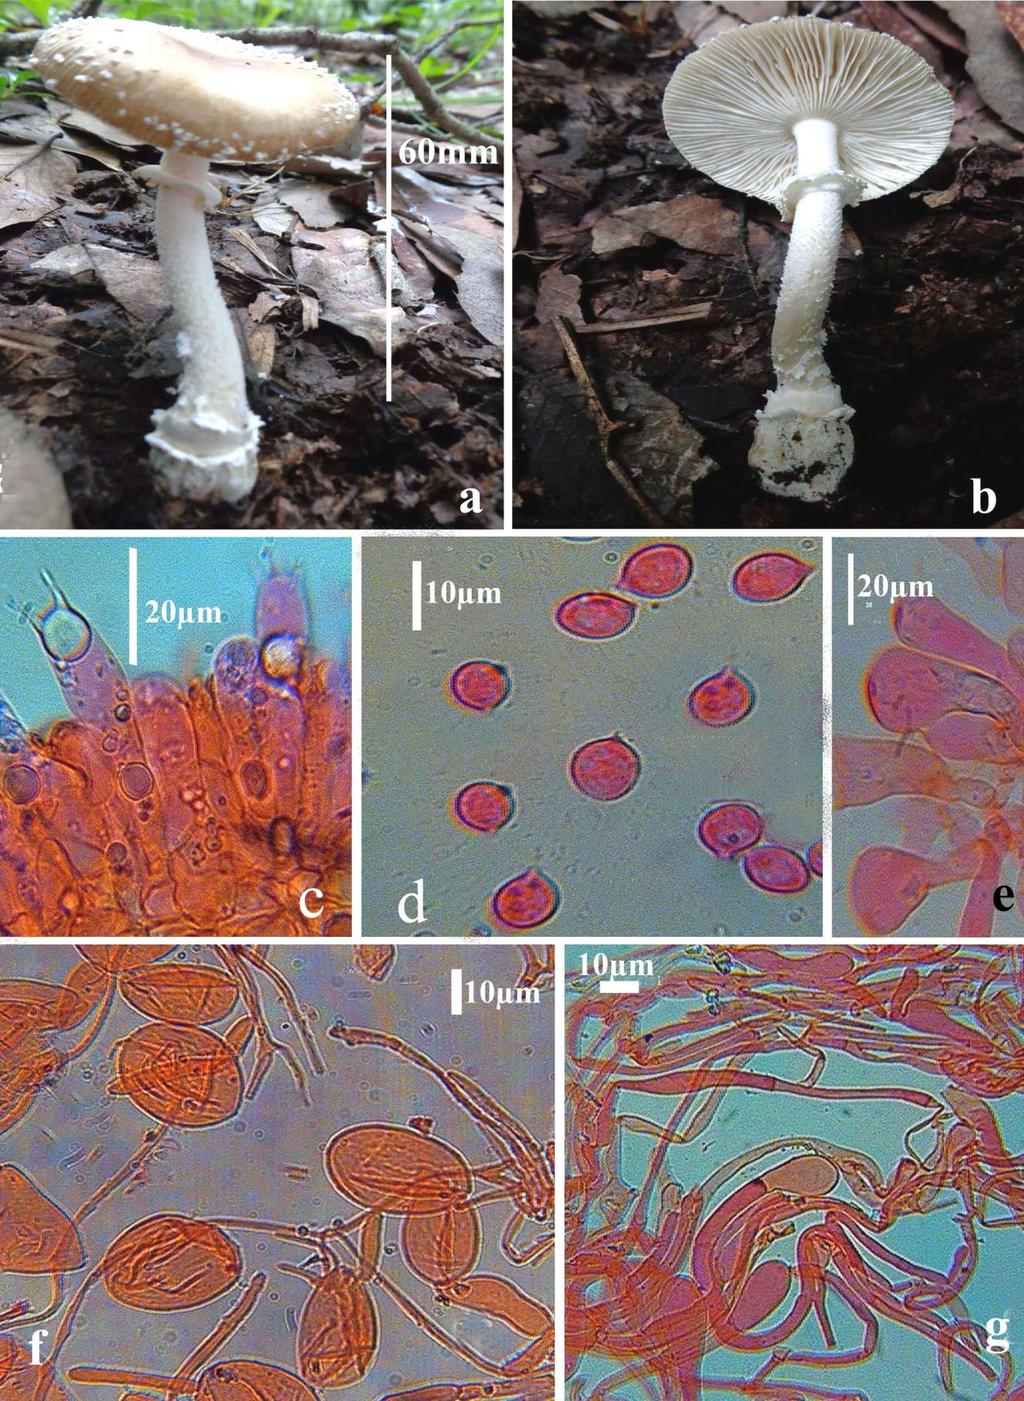 Fig. 9 Amanita parvipantherina a & b Fresh basidiocarps in the field. c Hymenium & subhymenium. d Basidiospores. e lamellae edge cells.